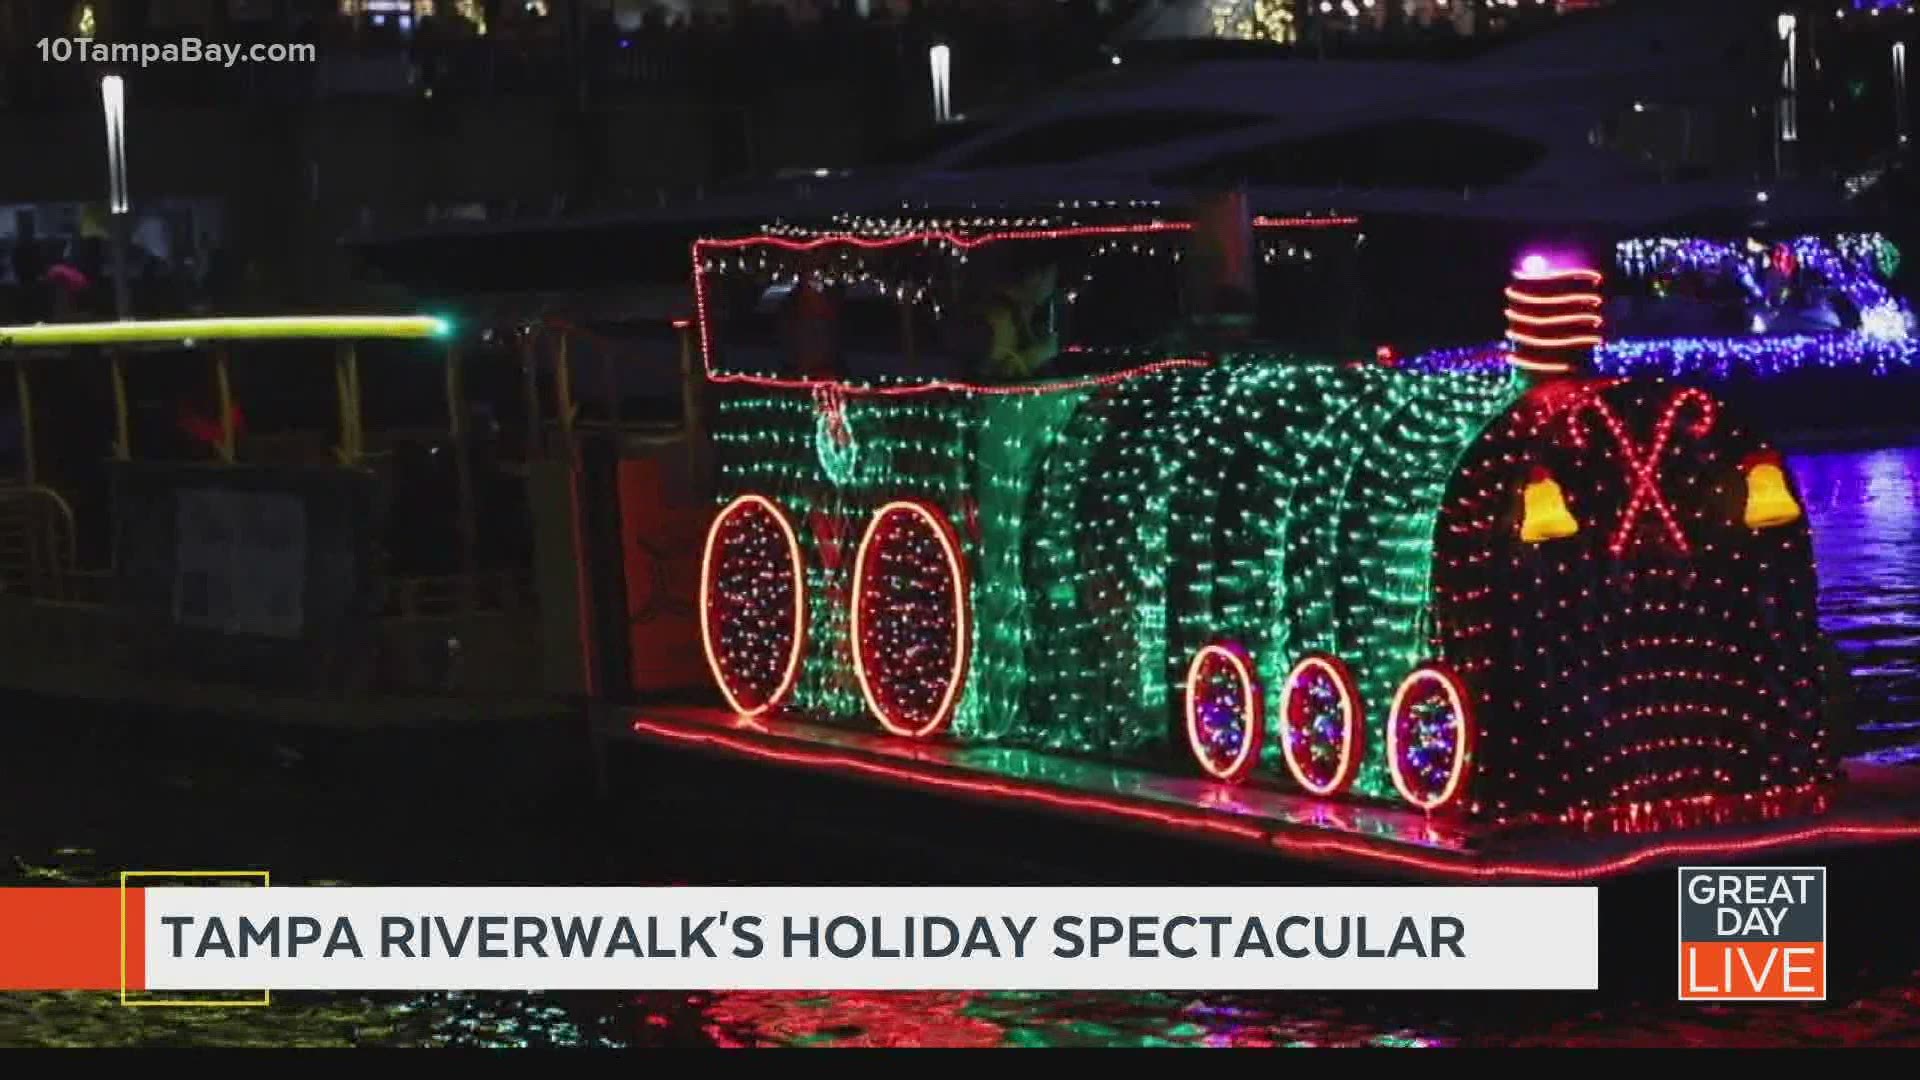 Tampa Riverwalk’s Holiday Spectacular